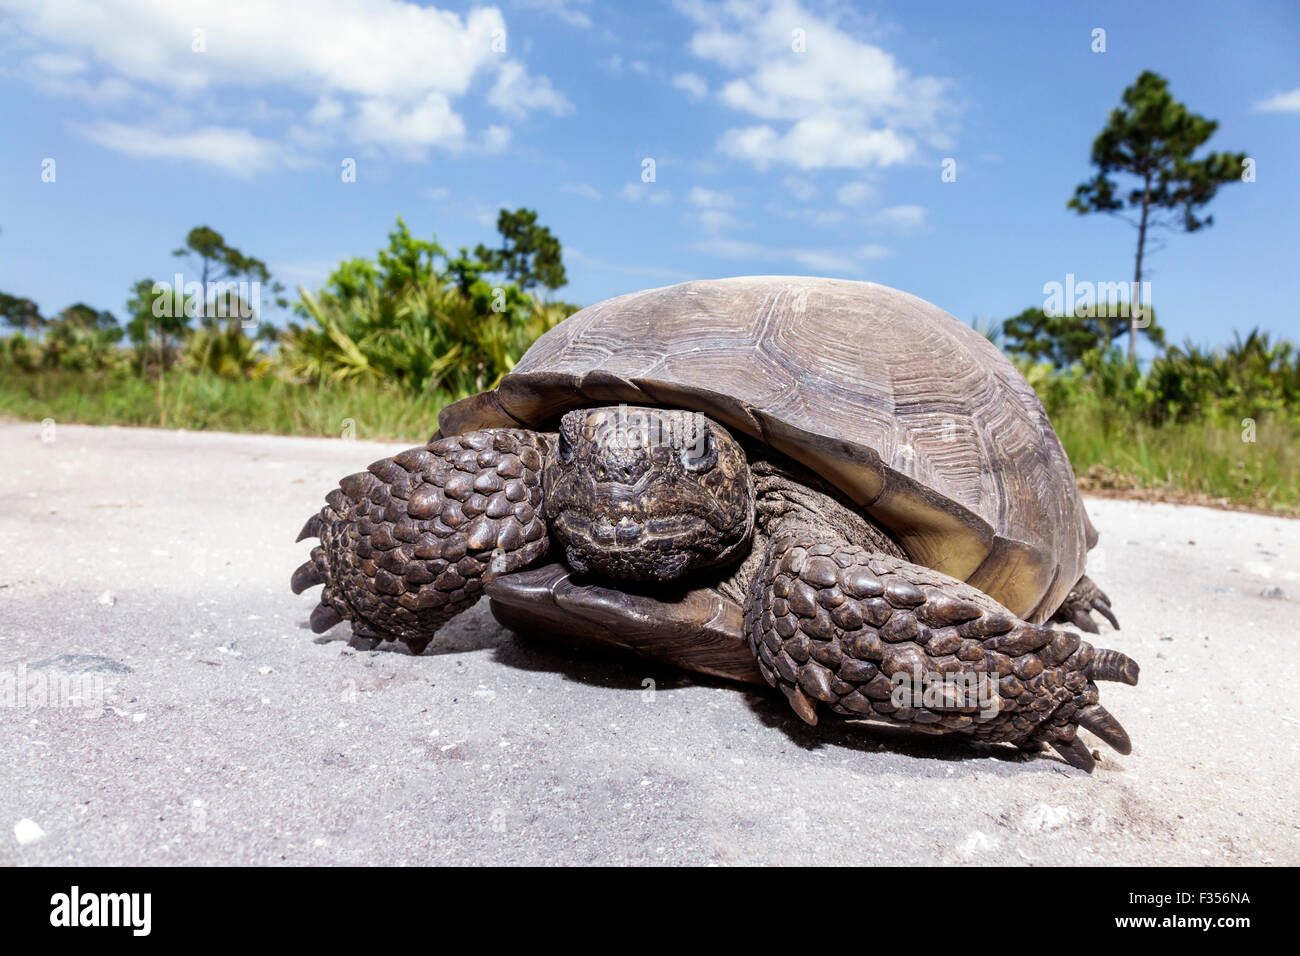 Florida Port Saint St. Lucie,Savannas Preserve State Park,gopher tortoise,Gopherus polyphemus,FL150416034 Stock Photo